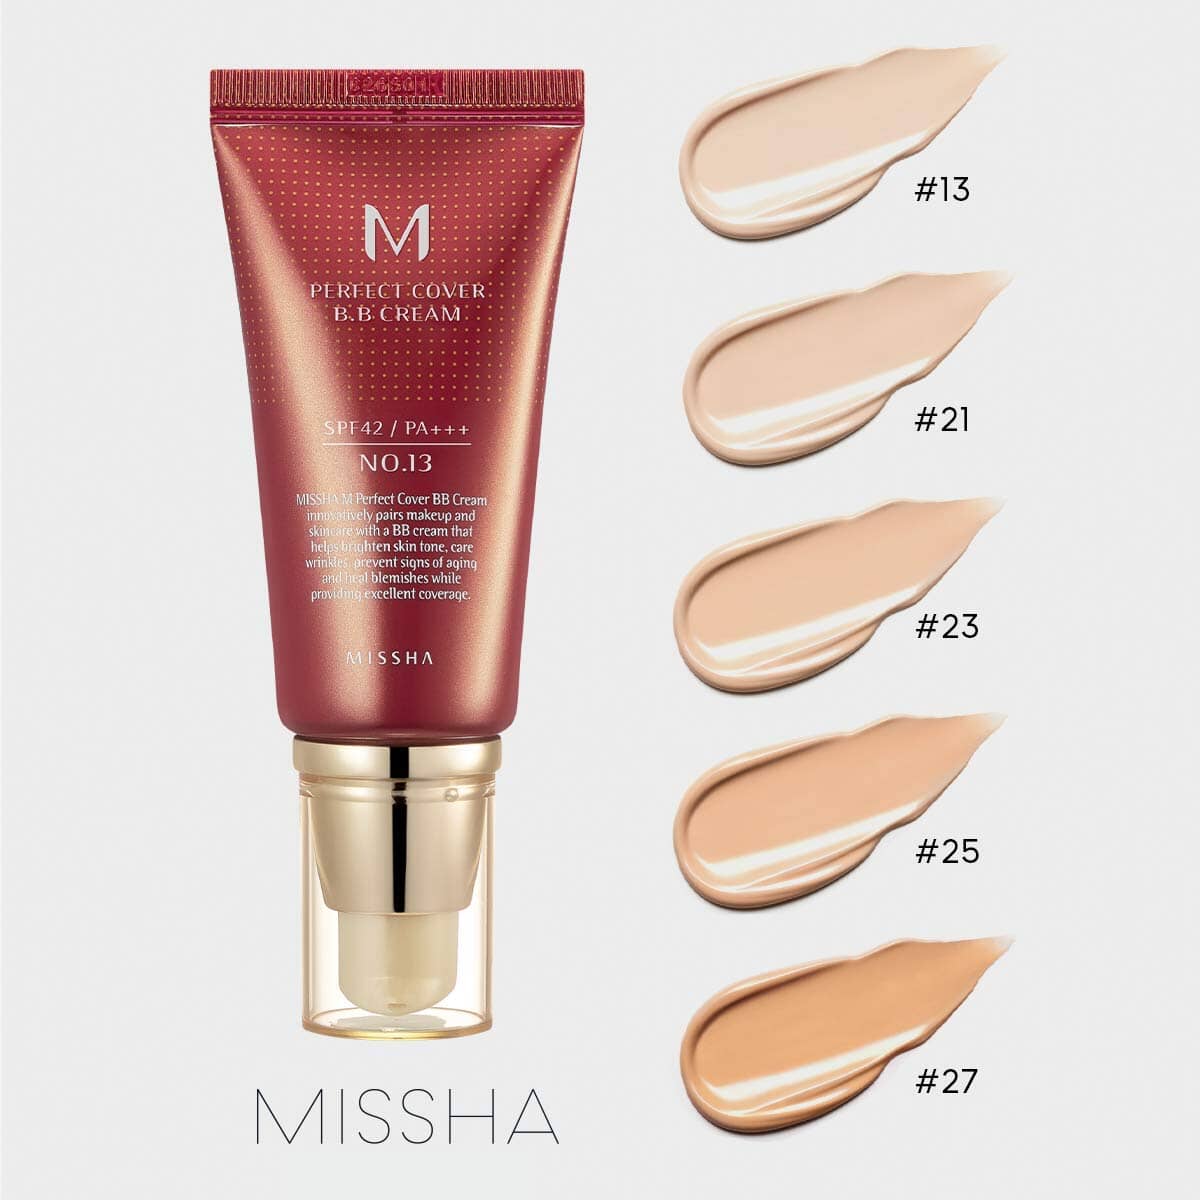 M Perfect Cover BB Cream No.13 Bright Beige SPF 42 PA+++ Makeup Missha ORION XO Sri Lanka